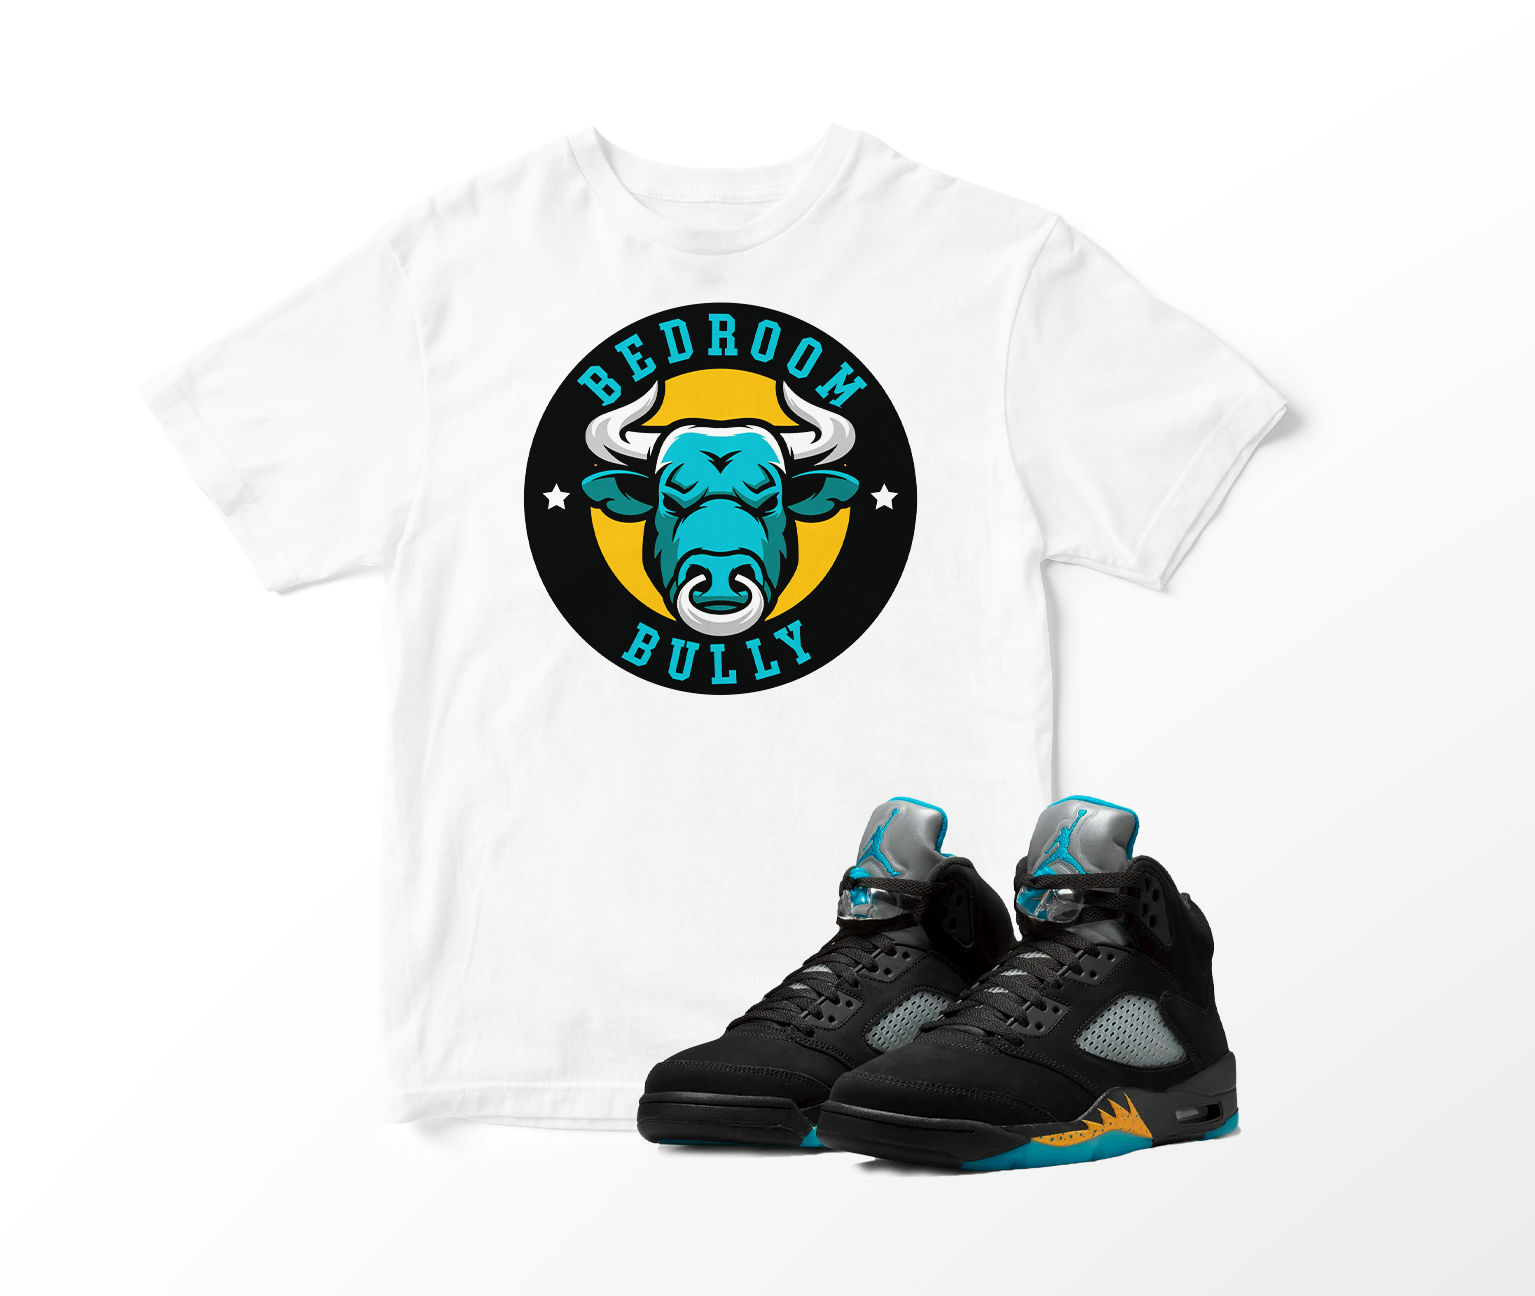 'Bedroom Bully' Custom Graphic Short Sleeve T-Shirt To Match Air Jordan 5 Aqua